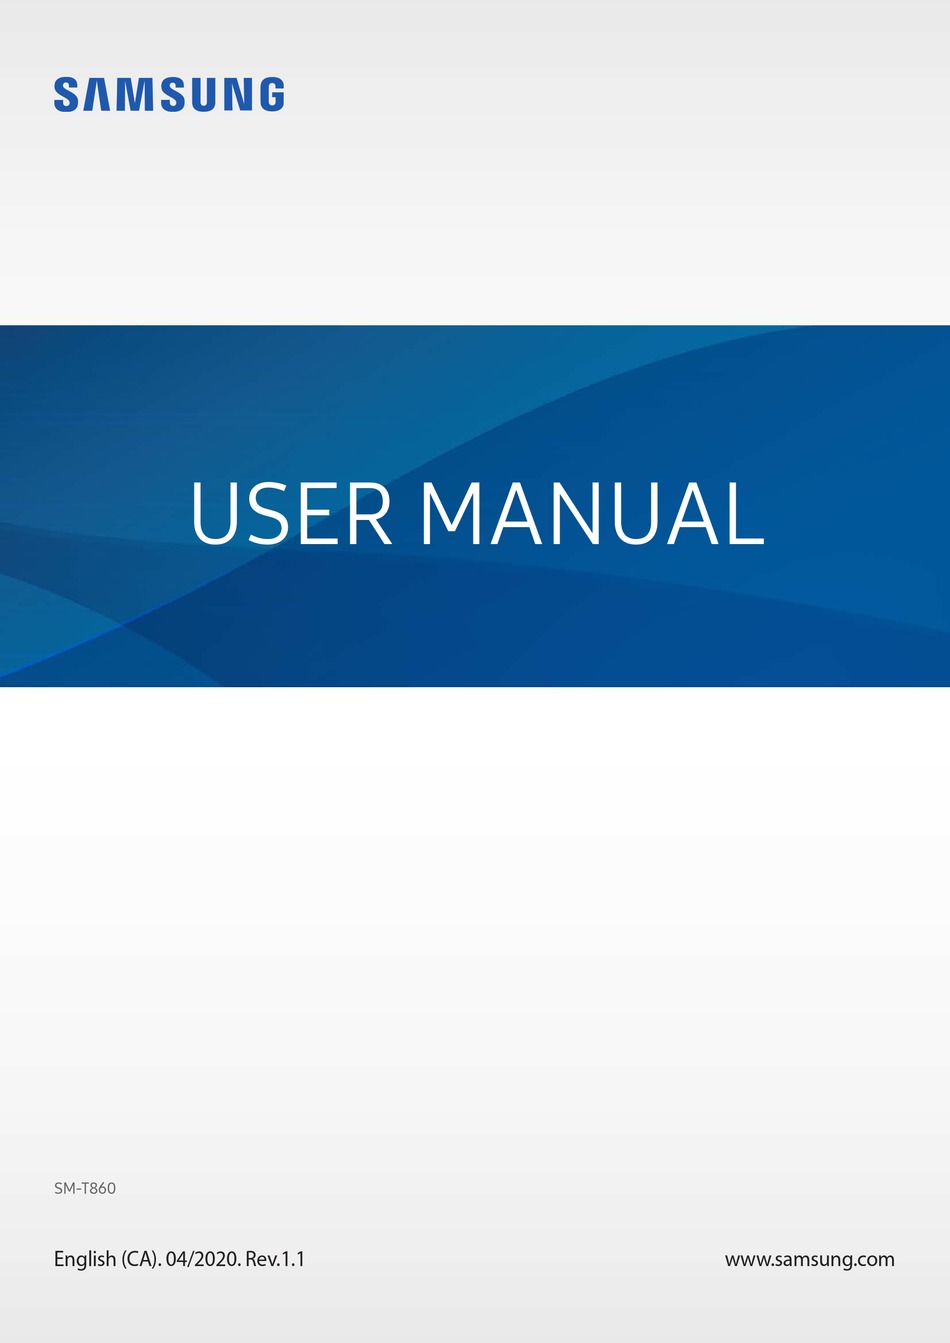 SAMSUNG GALAXY TAB S6 USER MANUAL Pdf Download | ManualsLib